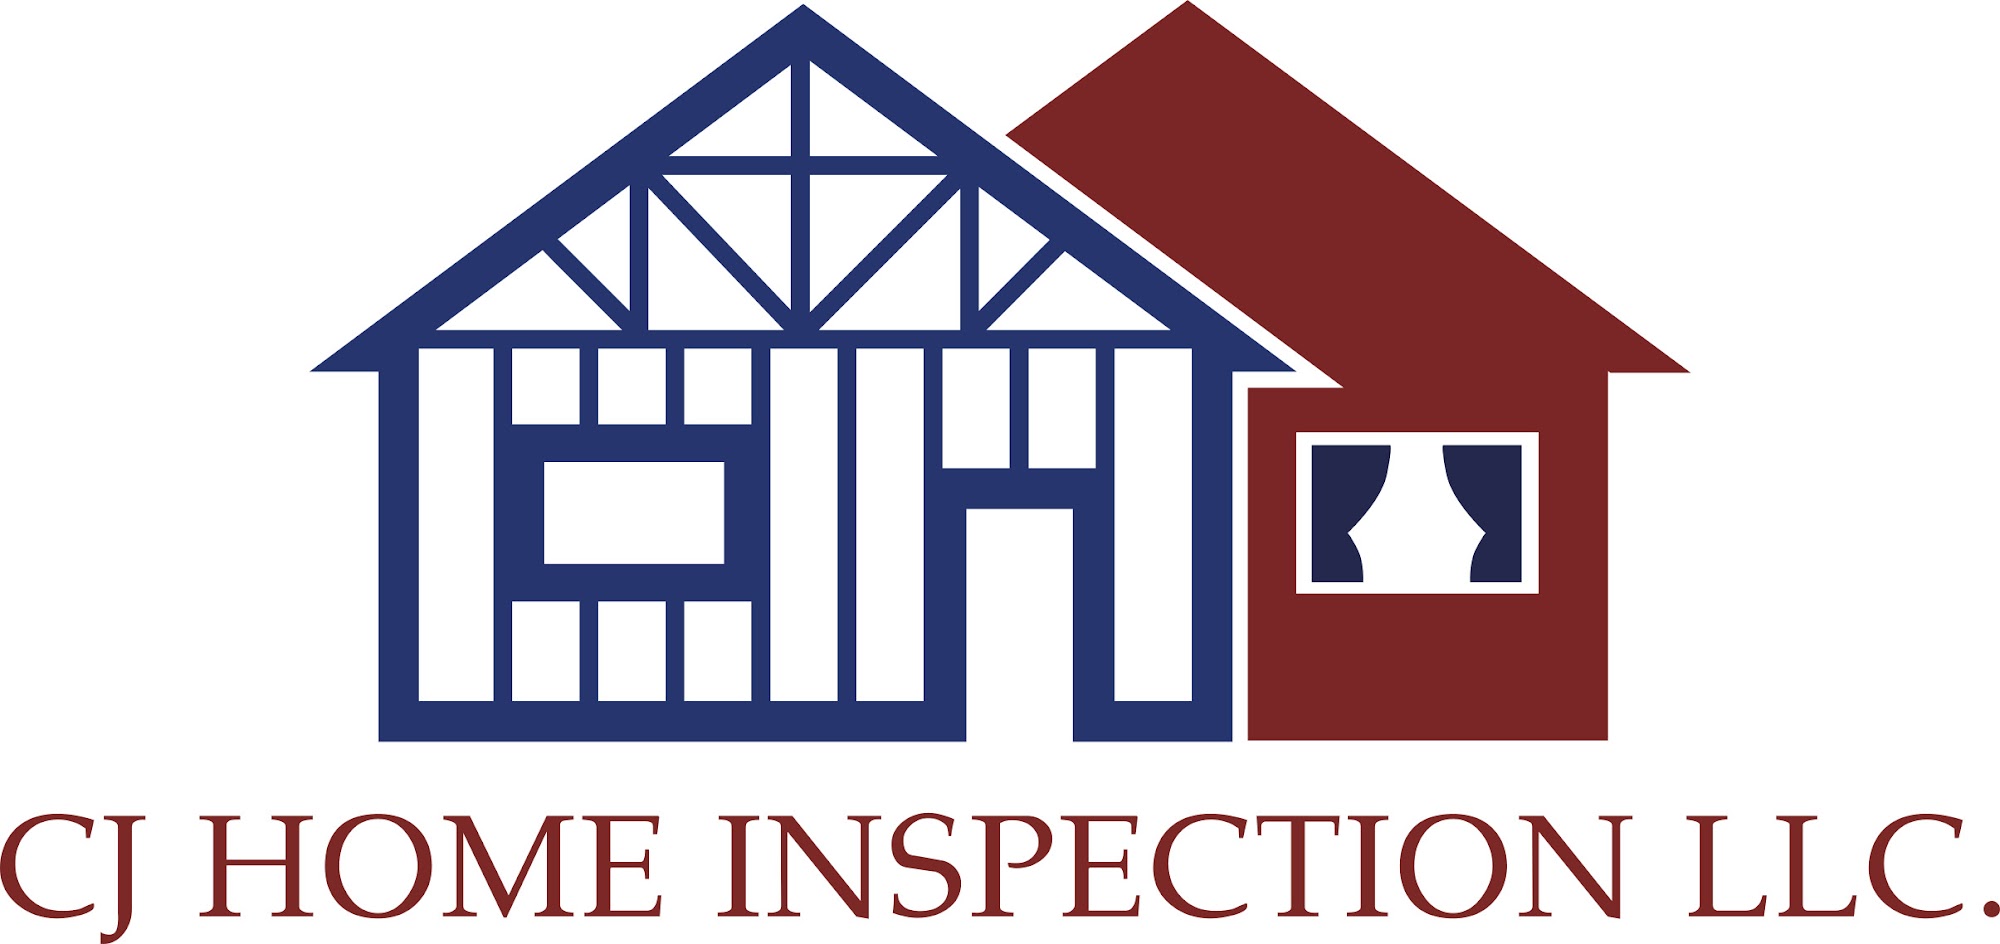 CJ Home Inspection LLC 2508 Bingley Rd, Cazenovia New York 13035